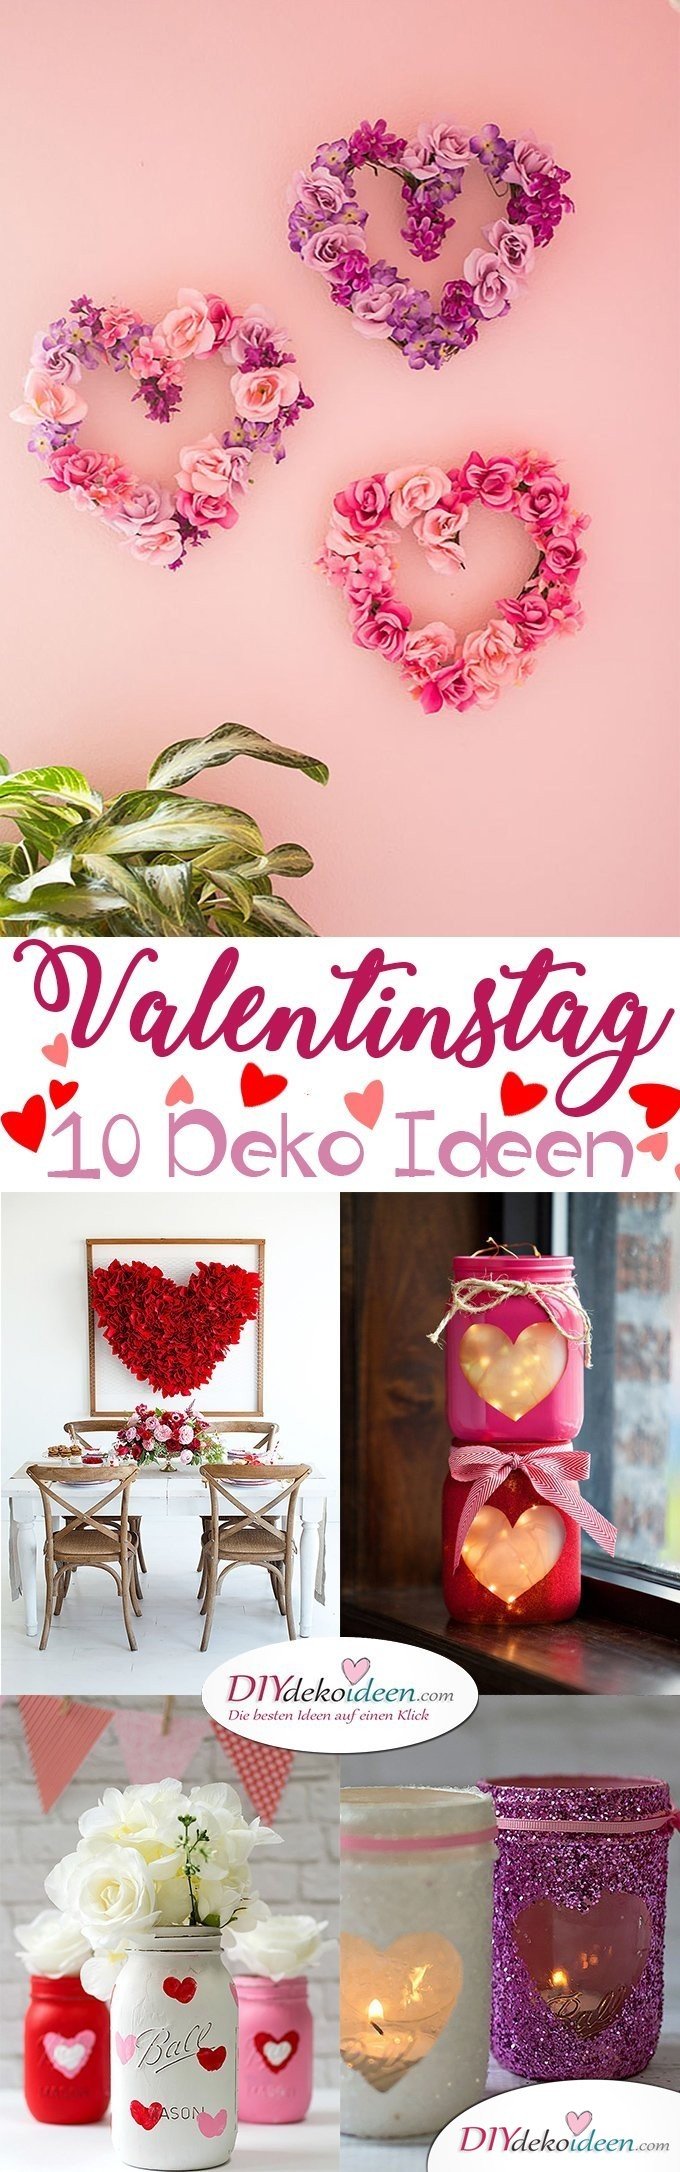 Valentinstag 10 Deko Ideen, Blumenherzen, Valentinstag Deko Ideen, Deko Valentinstag, dekorieren, DIY Dekoideen, Deko basteln, romantische Deko, 